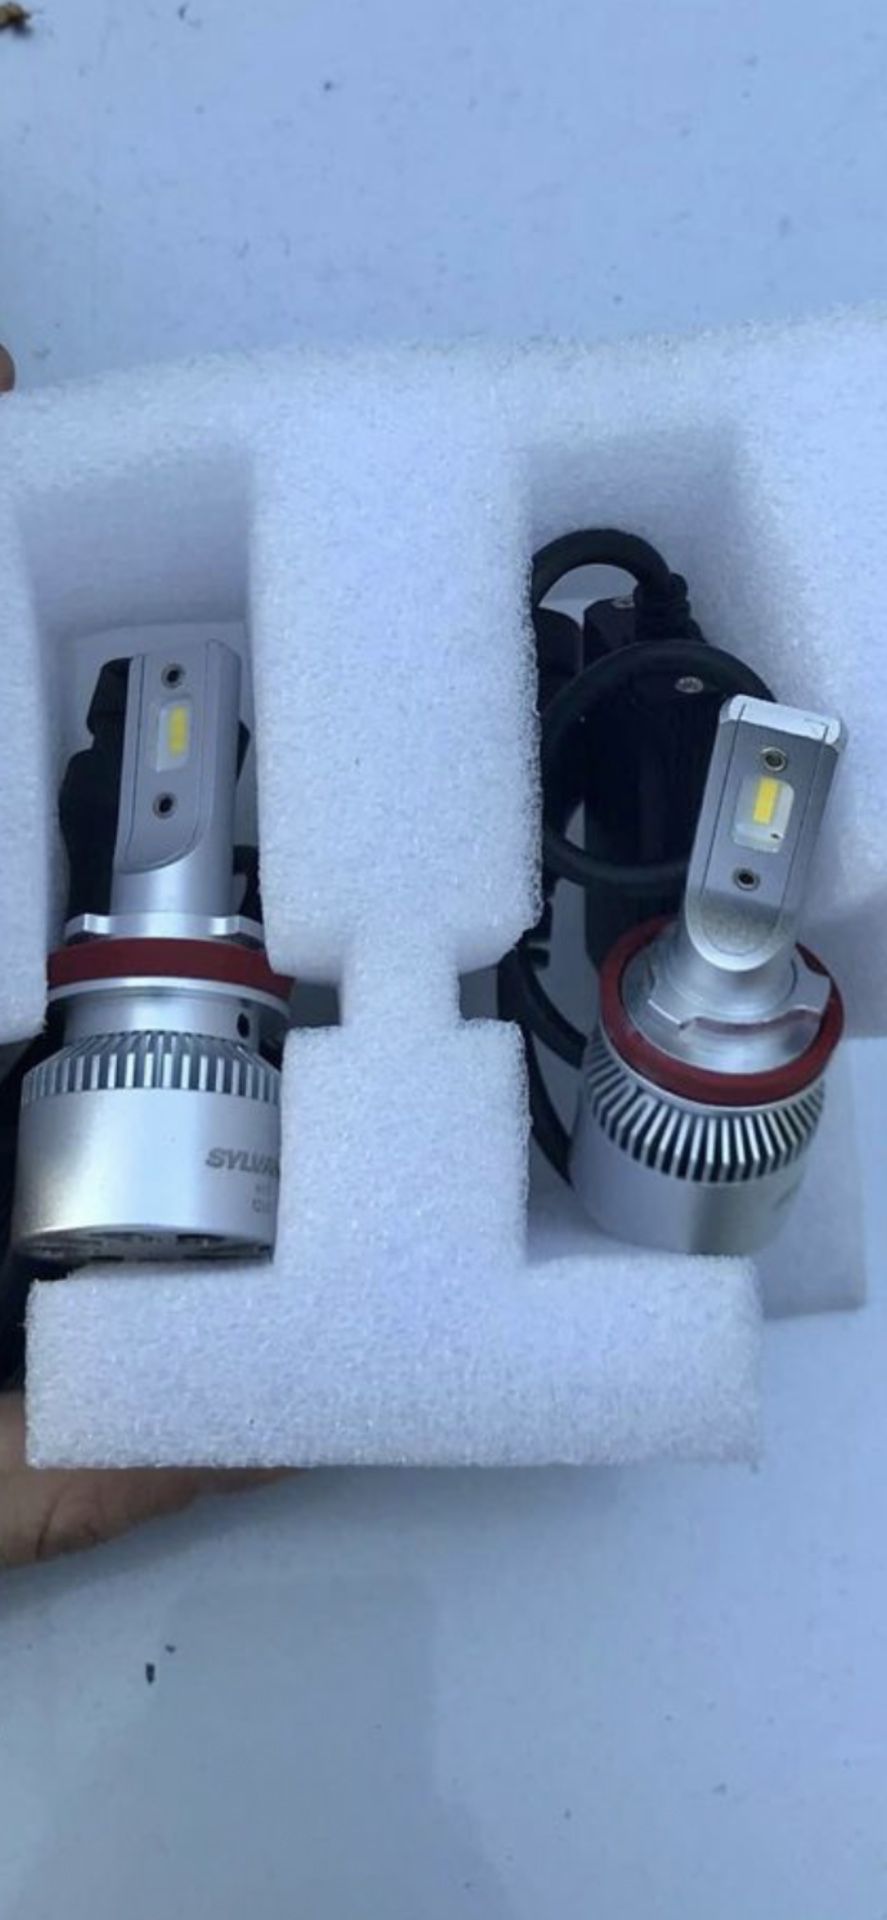 9006/HB4 Low Beam and 9005/HB3 High Beam LED Headlight Bulbs